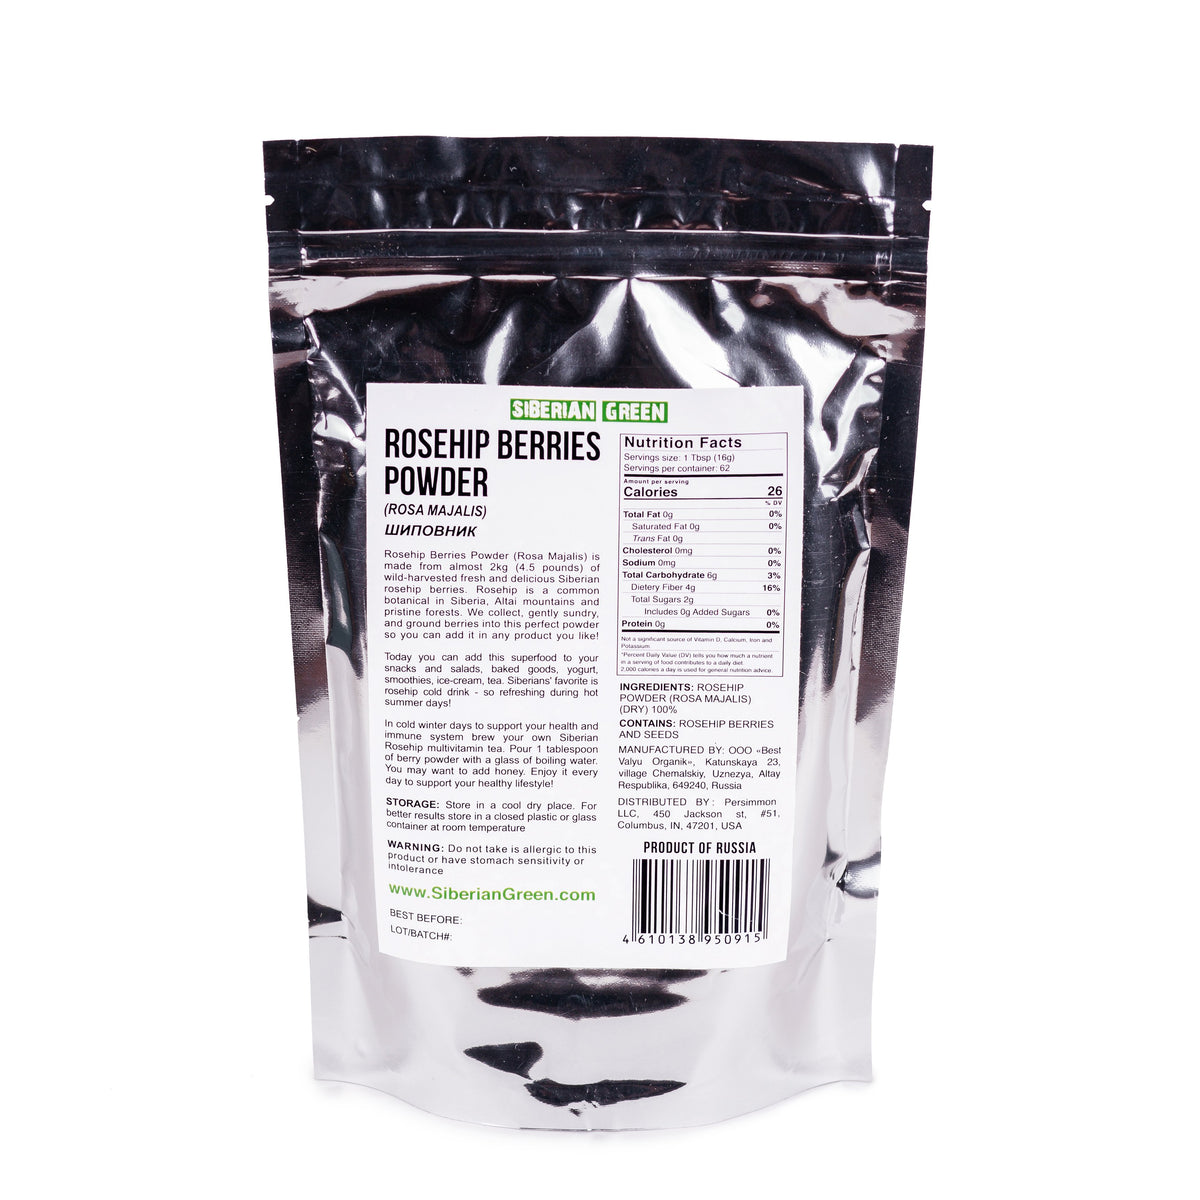 Ground Siberian Rose Hips Powder 300g (10.58 oz) - Rosehips Herbal Tea Flour